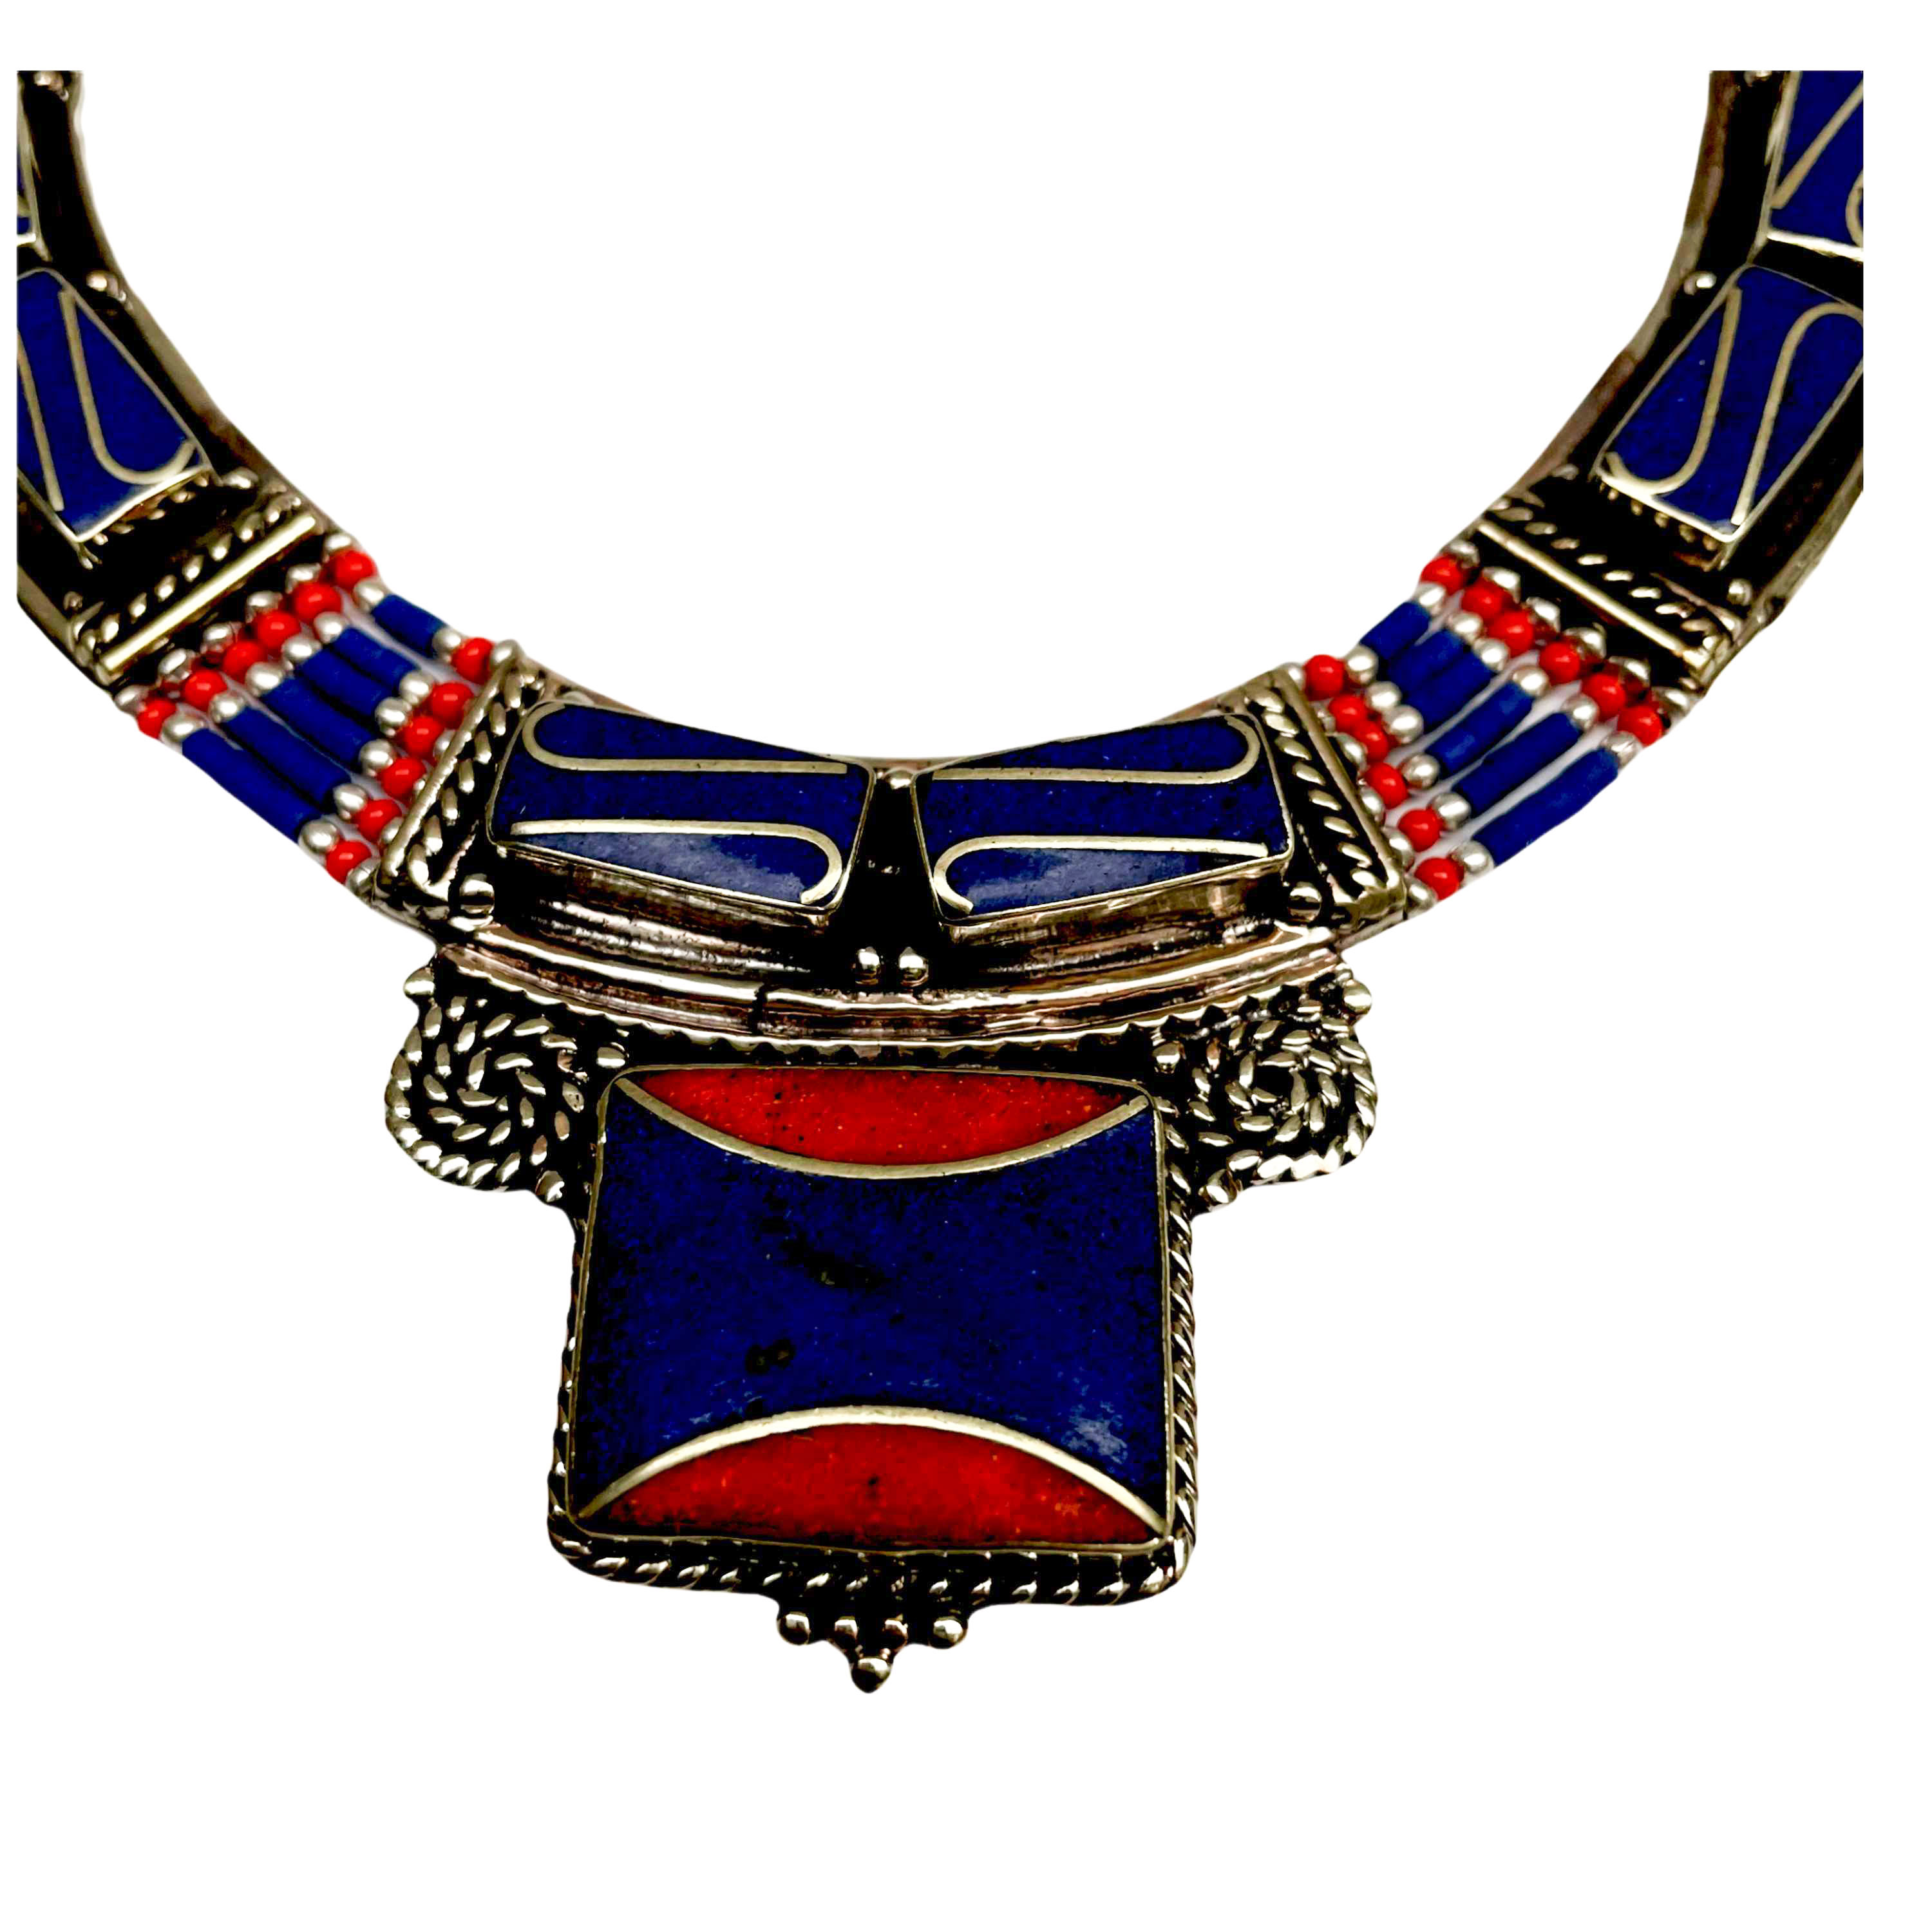 Handmade Nepali tribal Necklace, With stone Setting